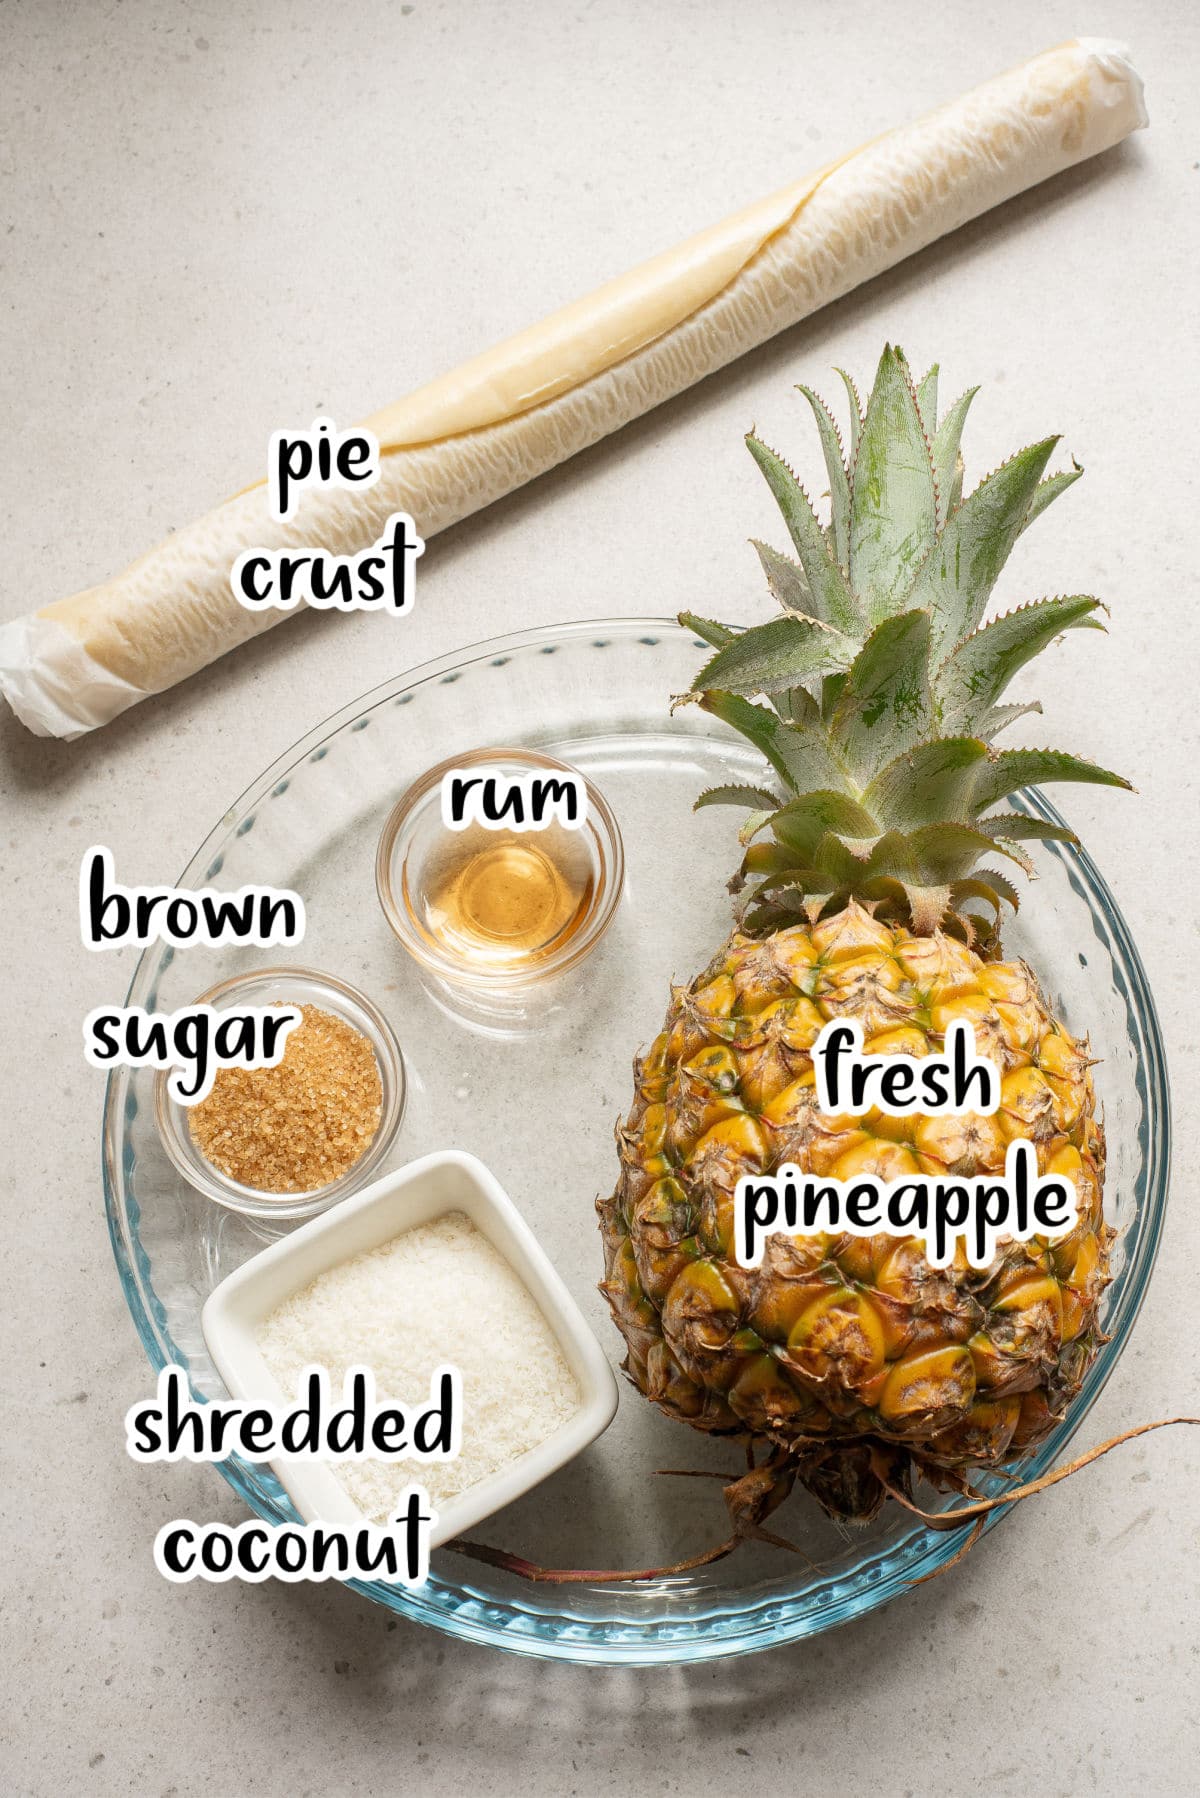 Ingredients to make pineapple pie.